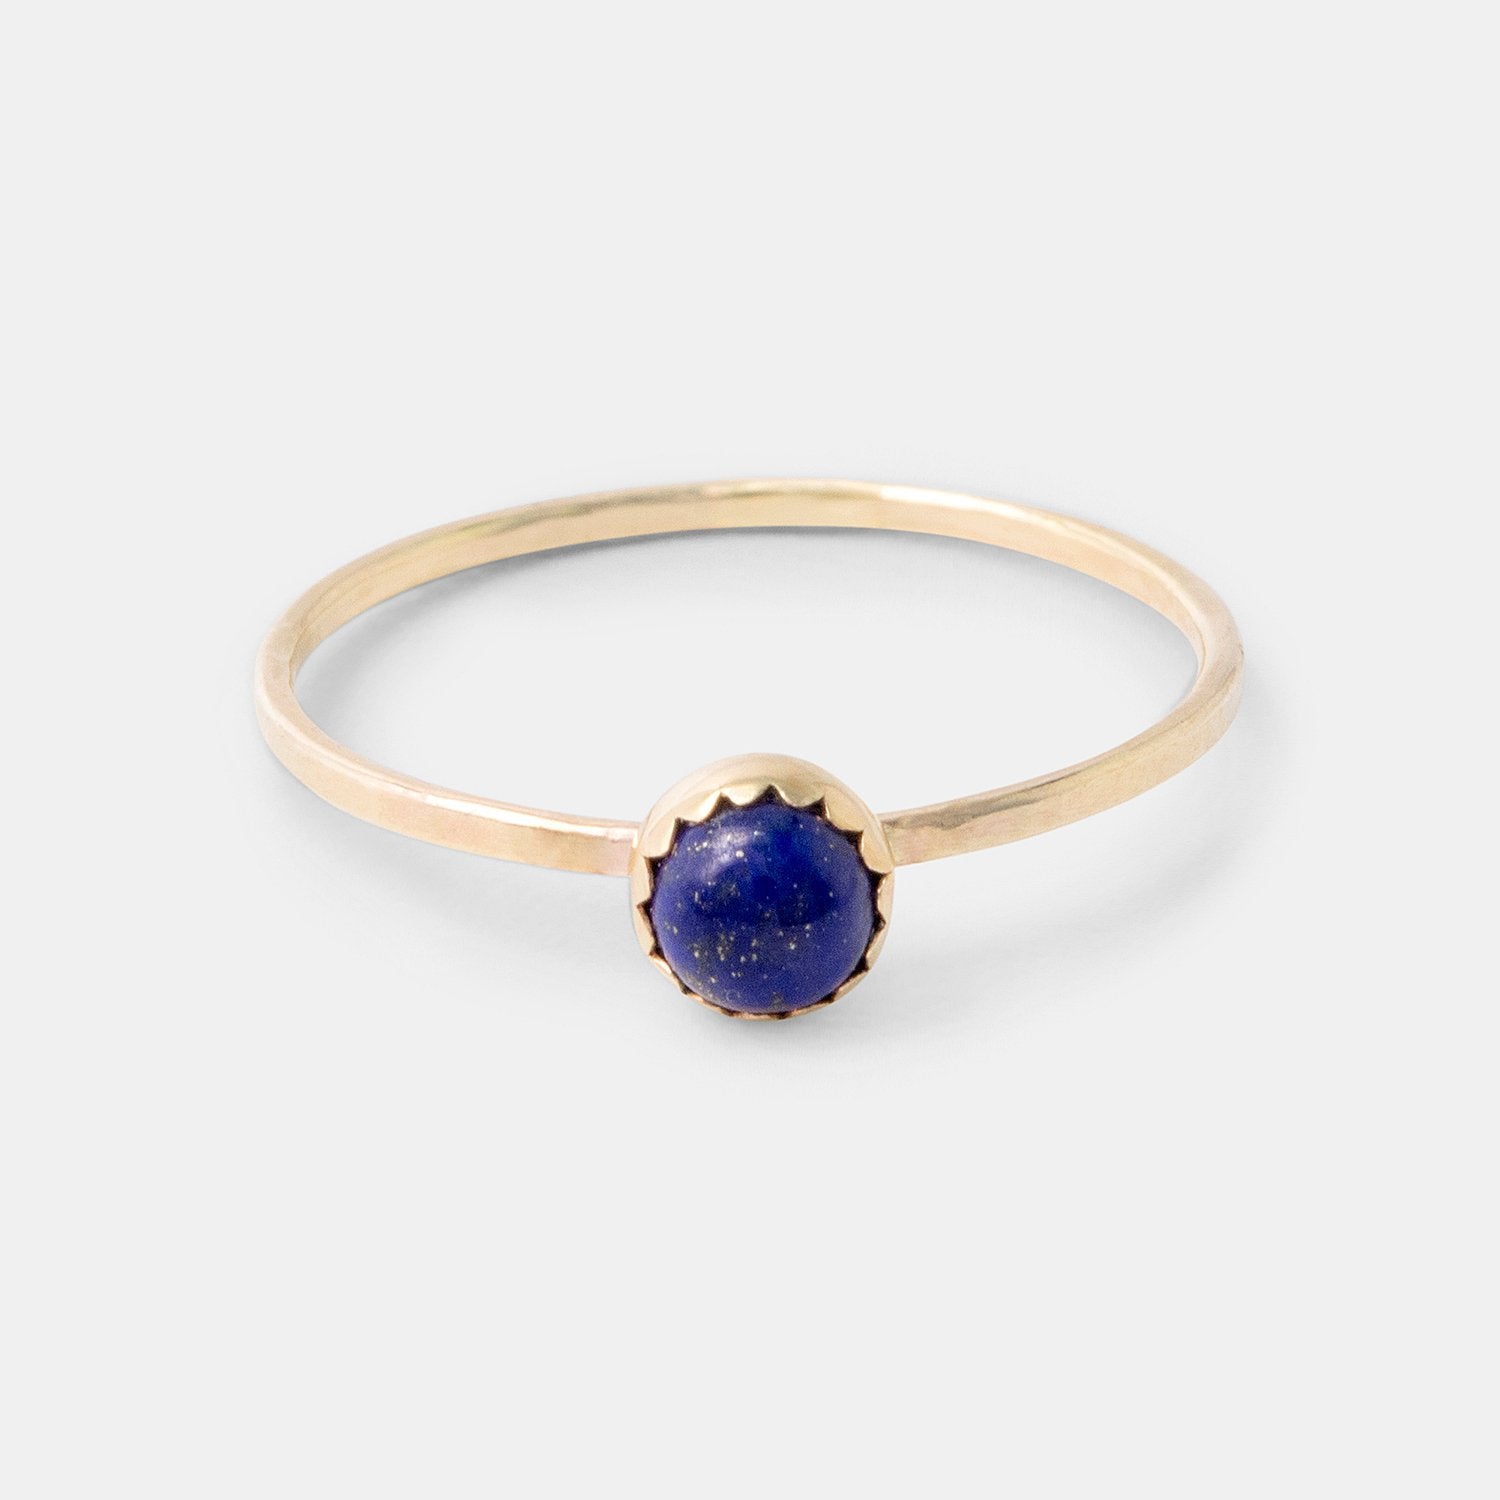 Lapis lazuli solid gold stacking ring - Simone Walsh Jewellery Australia